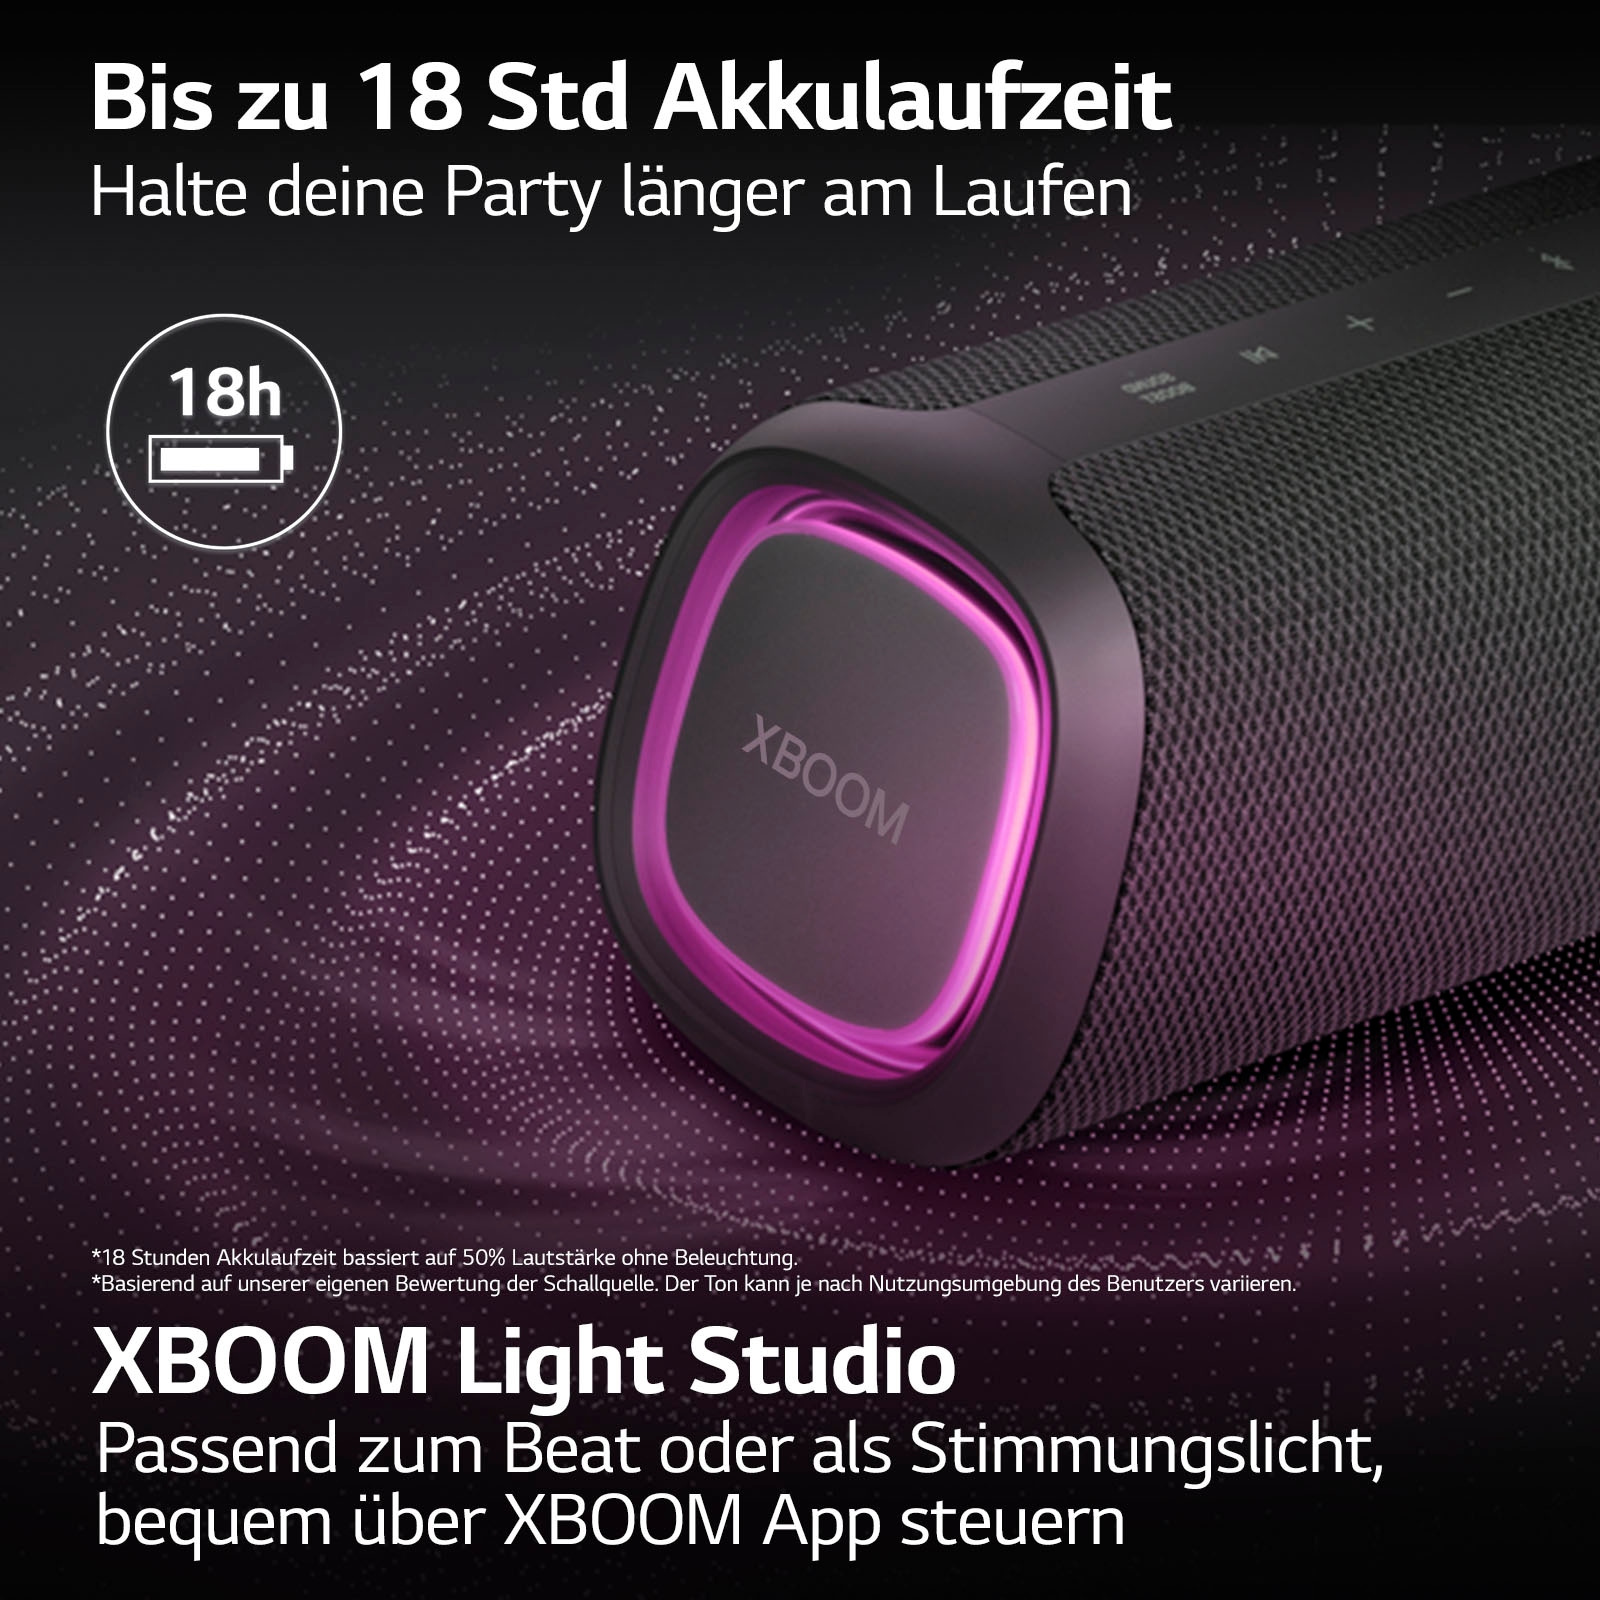 LG Lautsprecher »XBOOM Go DXG5«